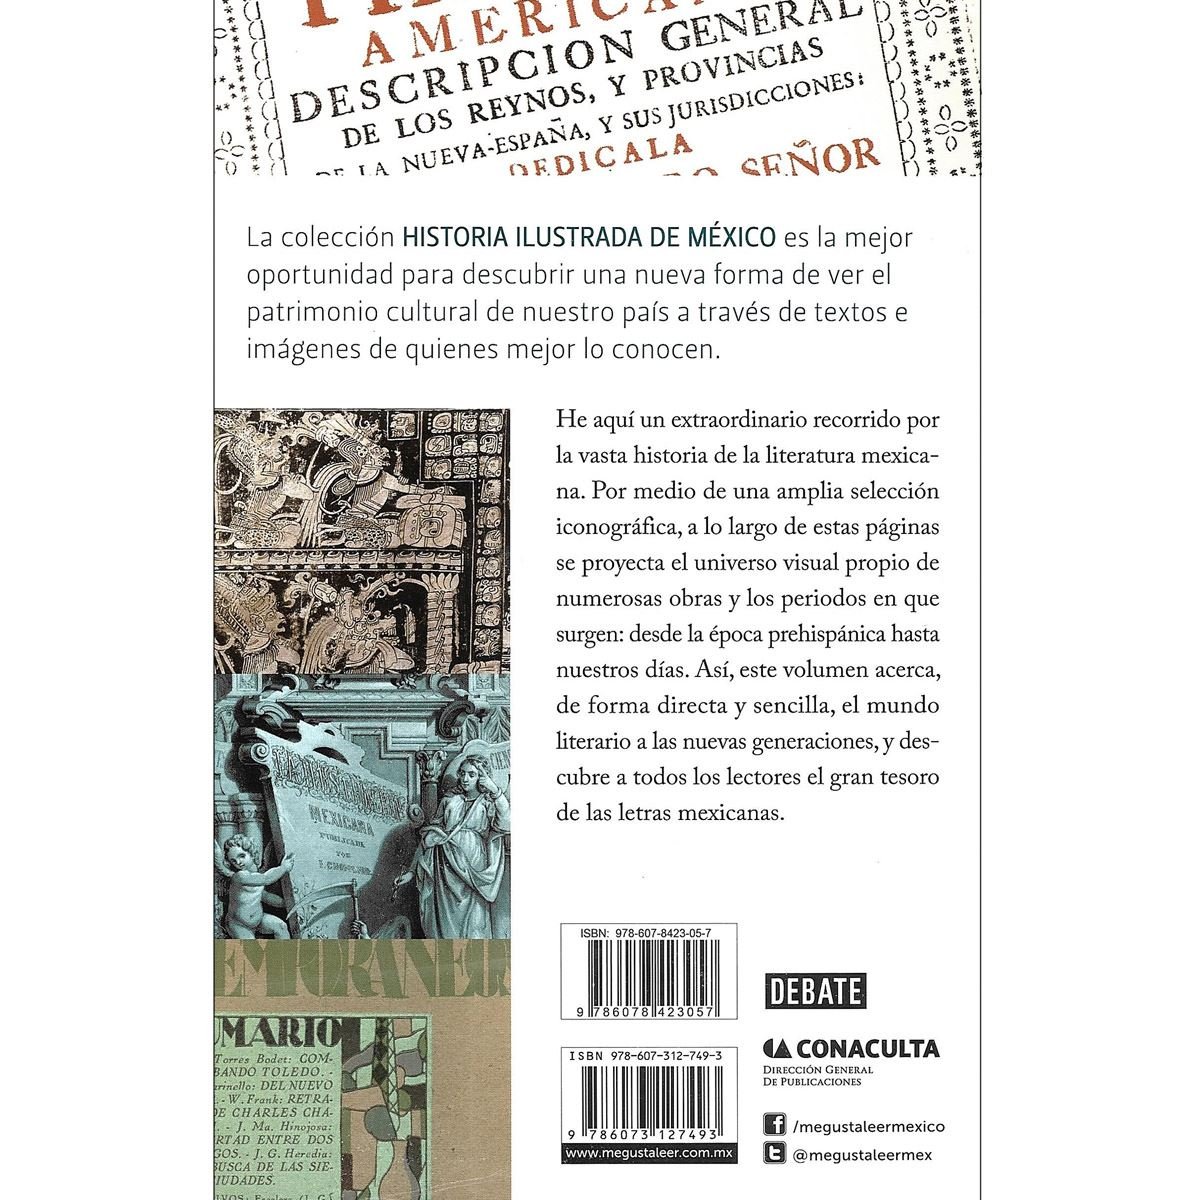 Literatura. Historia ilustrada de México